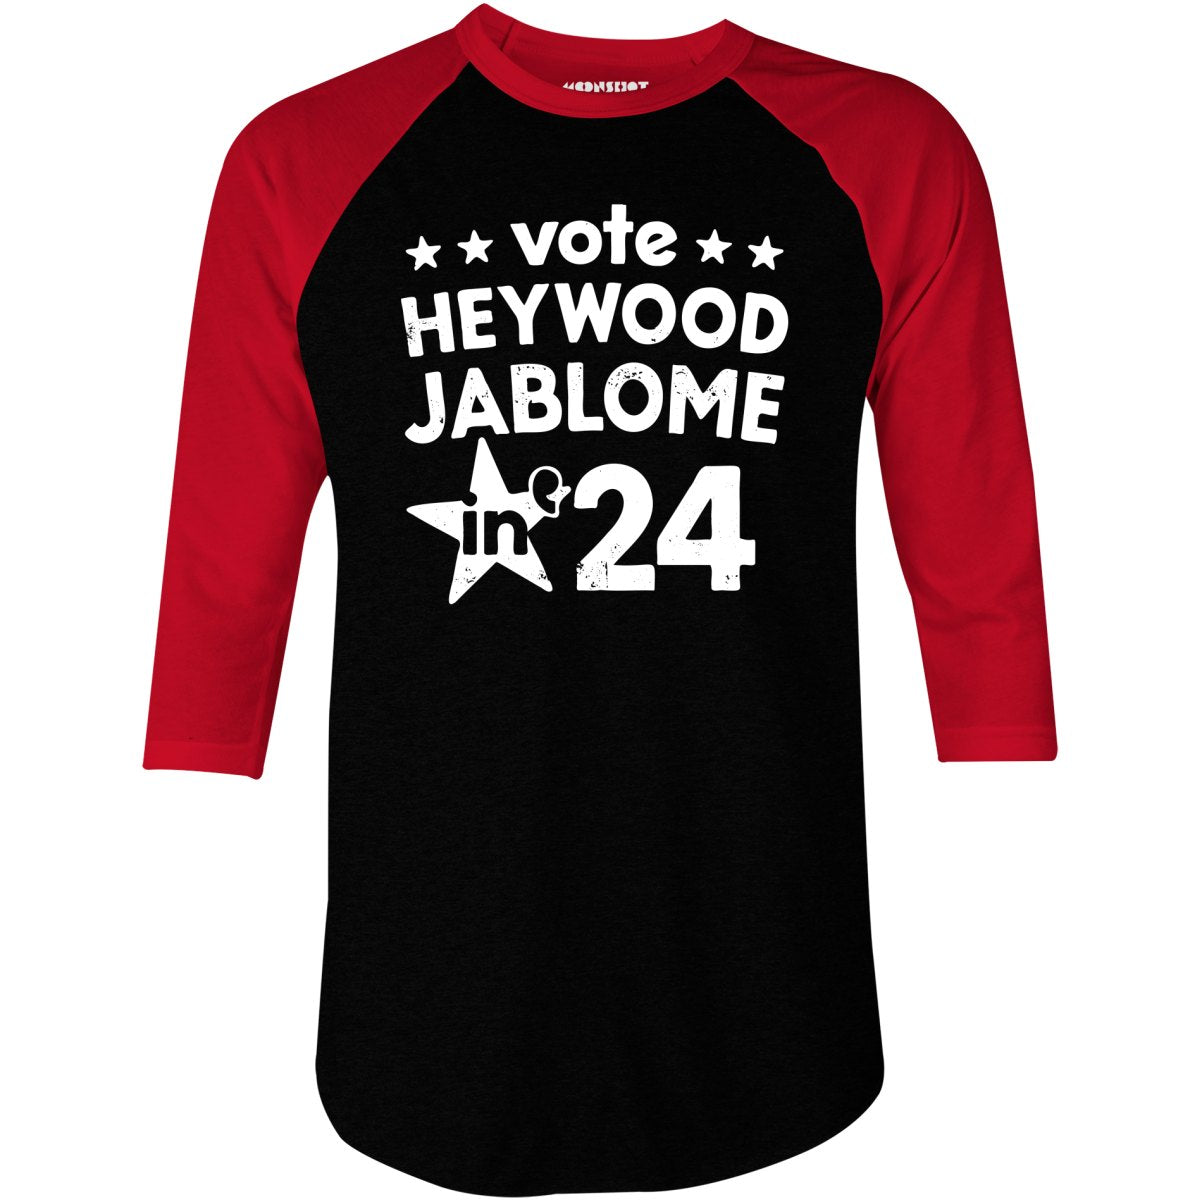 Heywood Jablome 2024 - 3/4 Sleeve Raglan T-Shirt